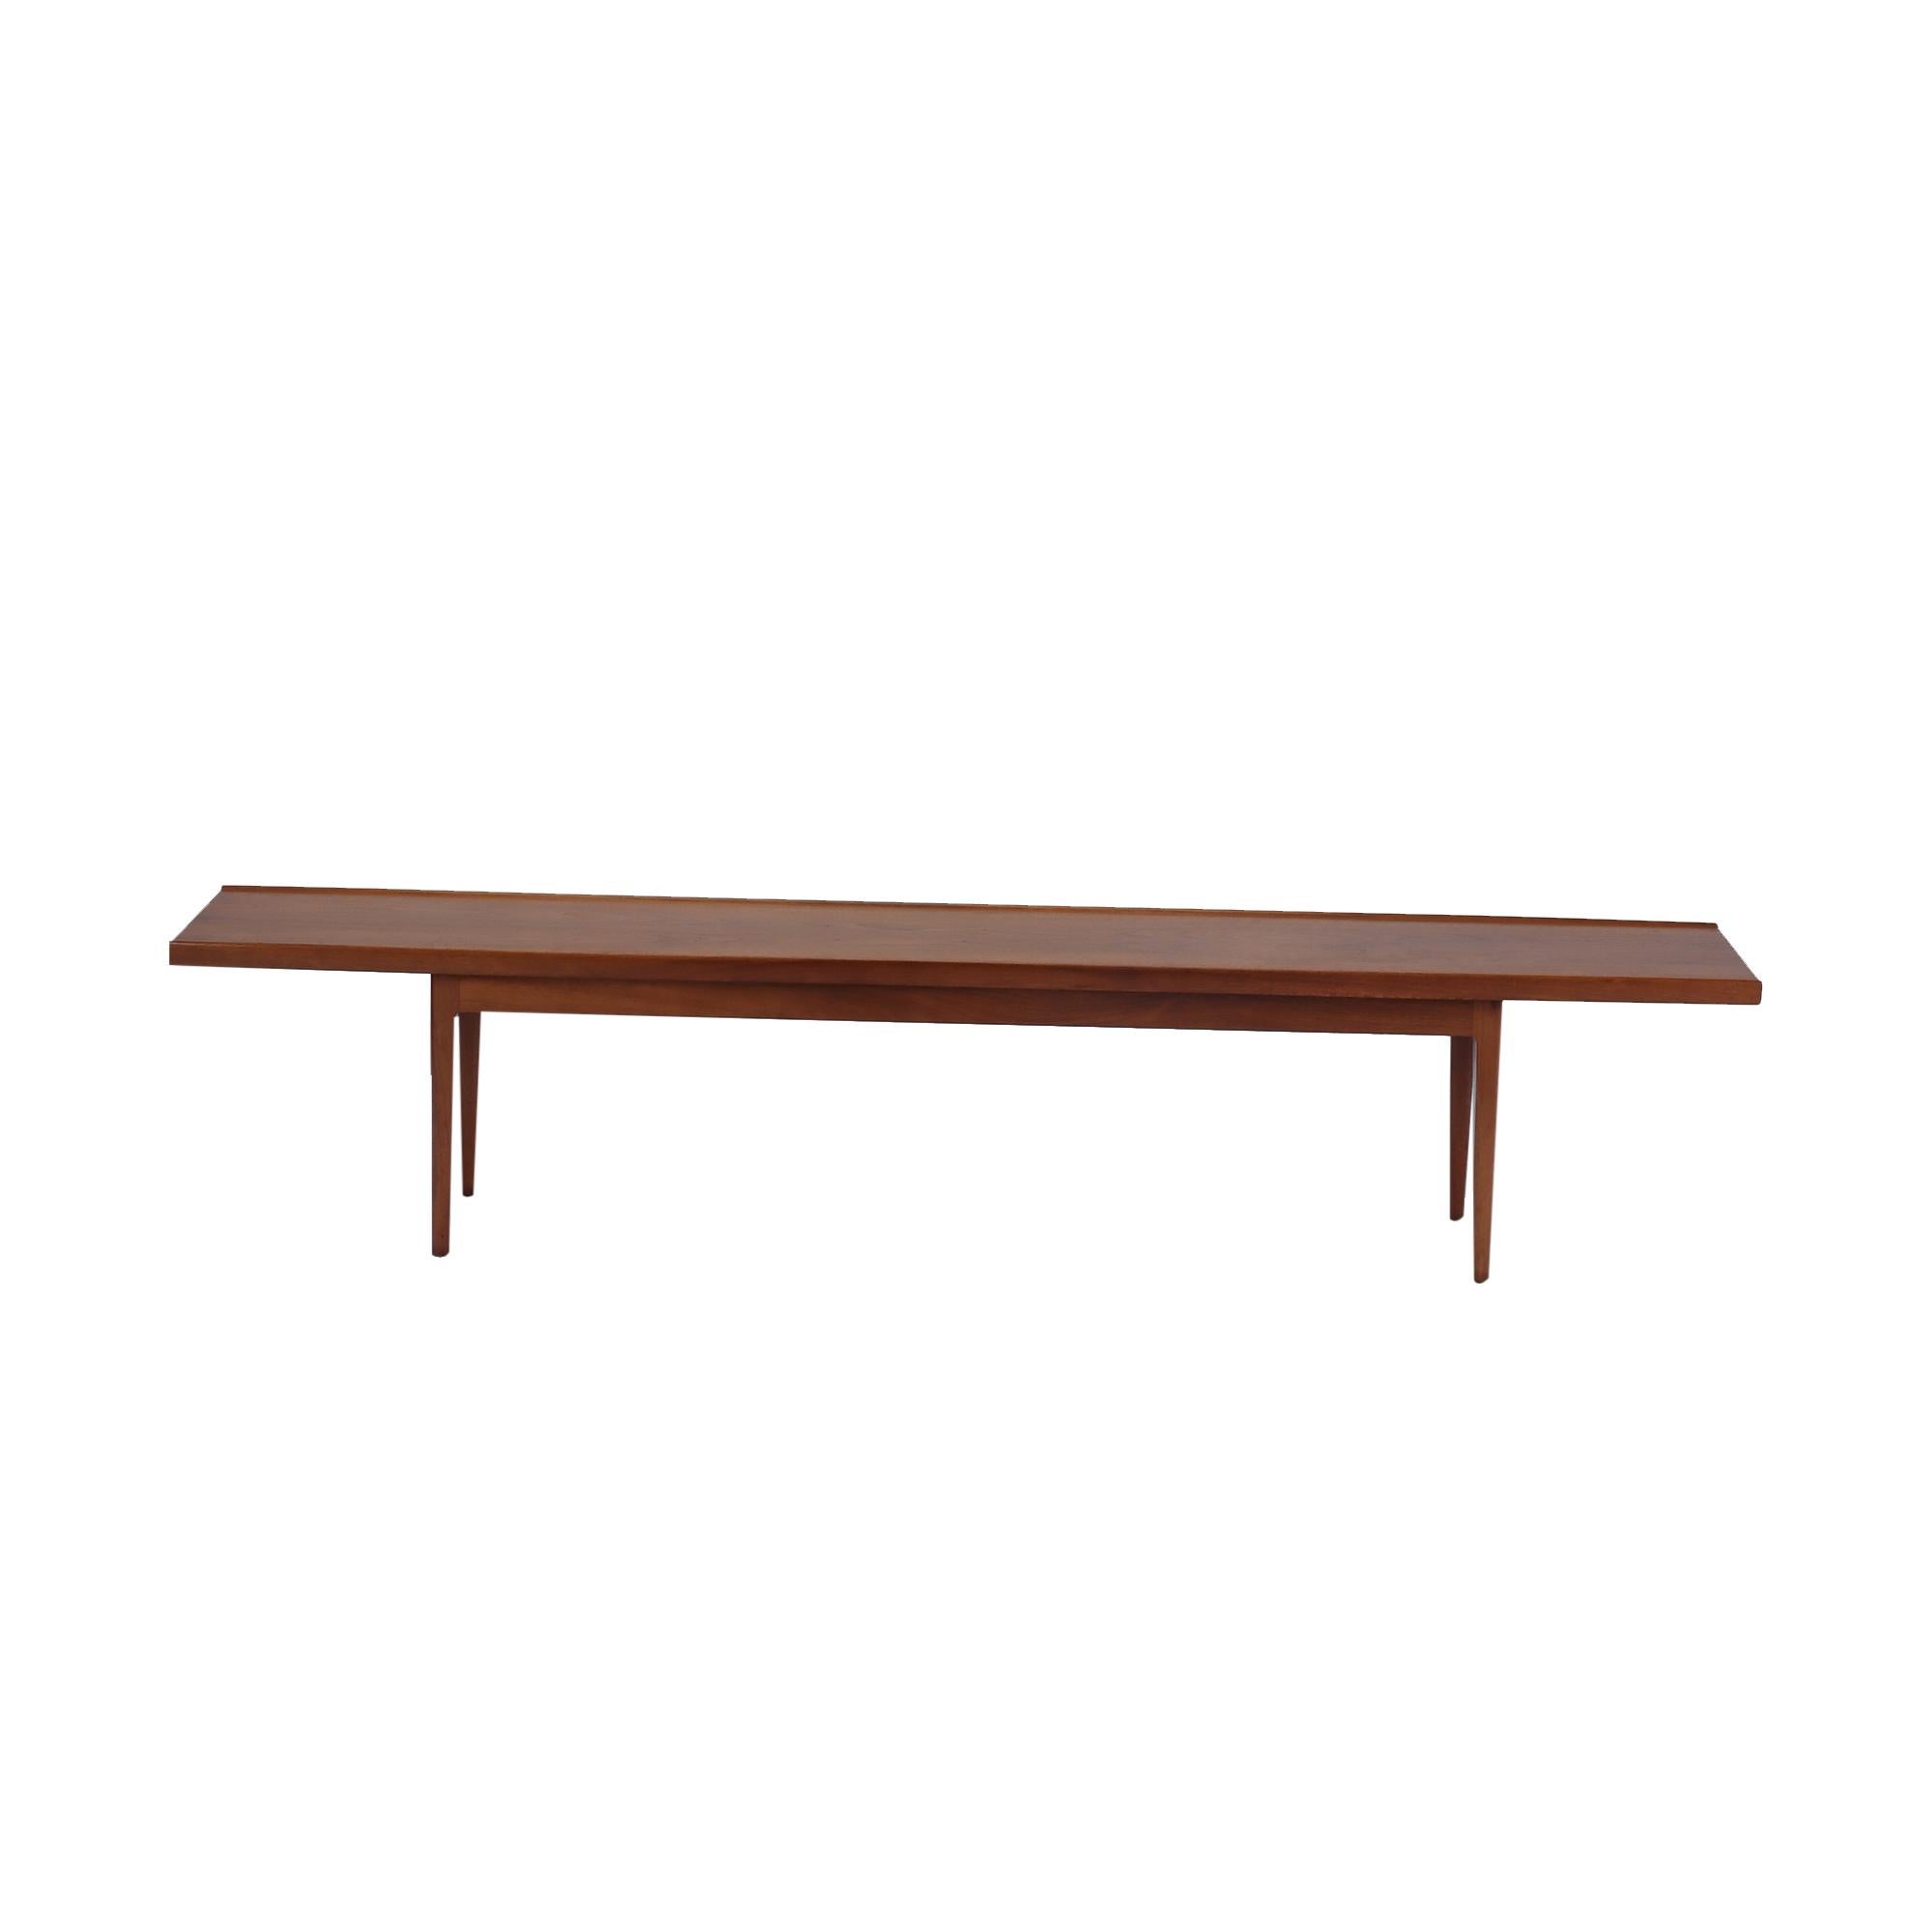 Modernist walnut bench table by Kipp Stewart for Drexel Furniture.